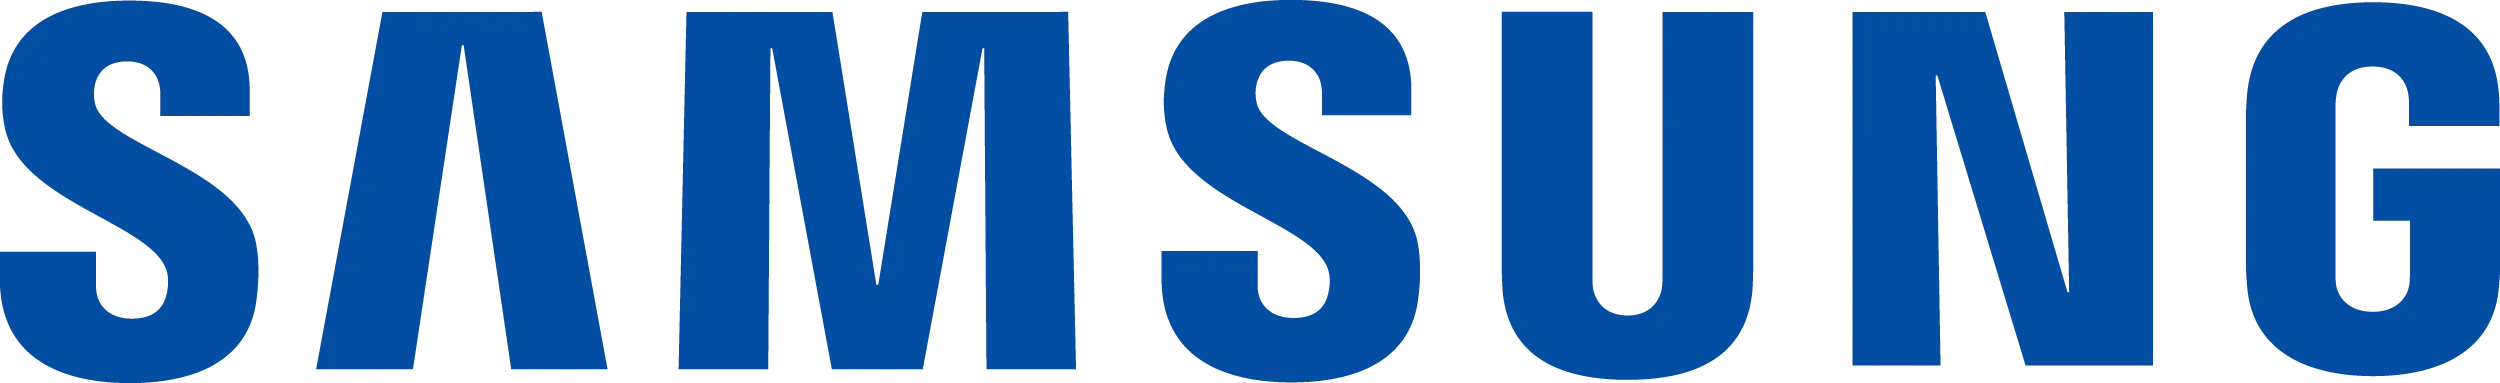 Samsung_Logo copy